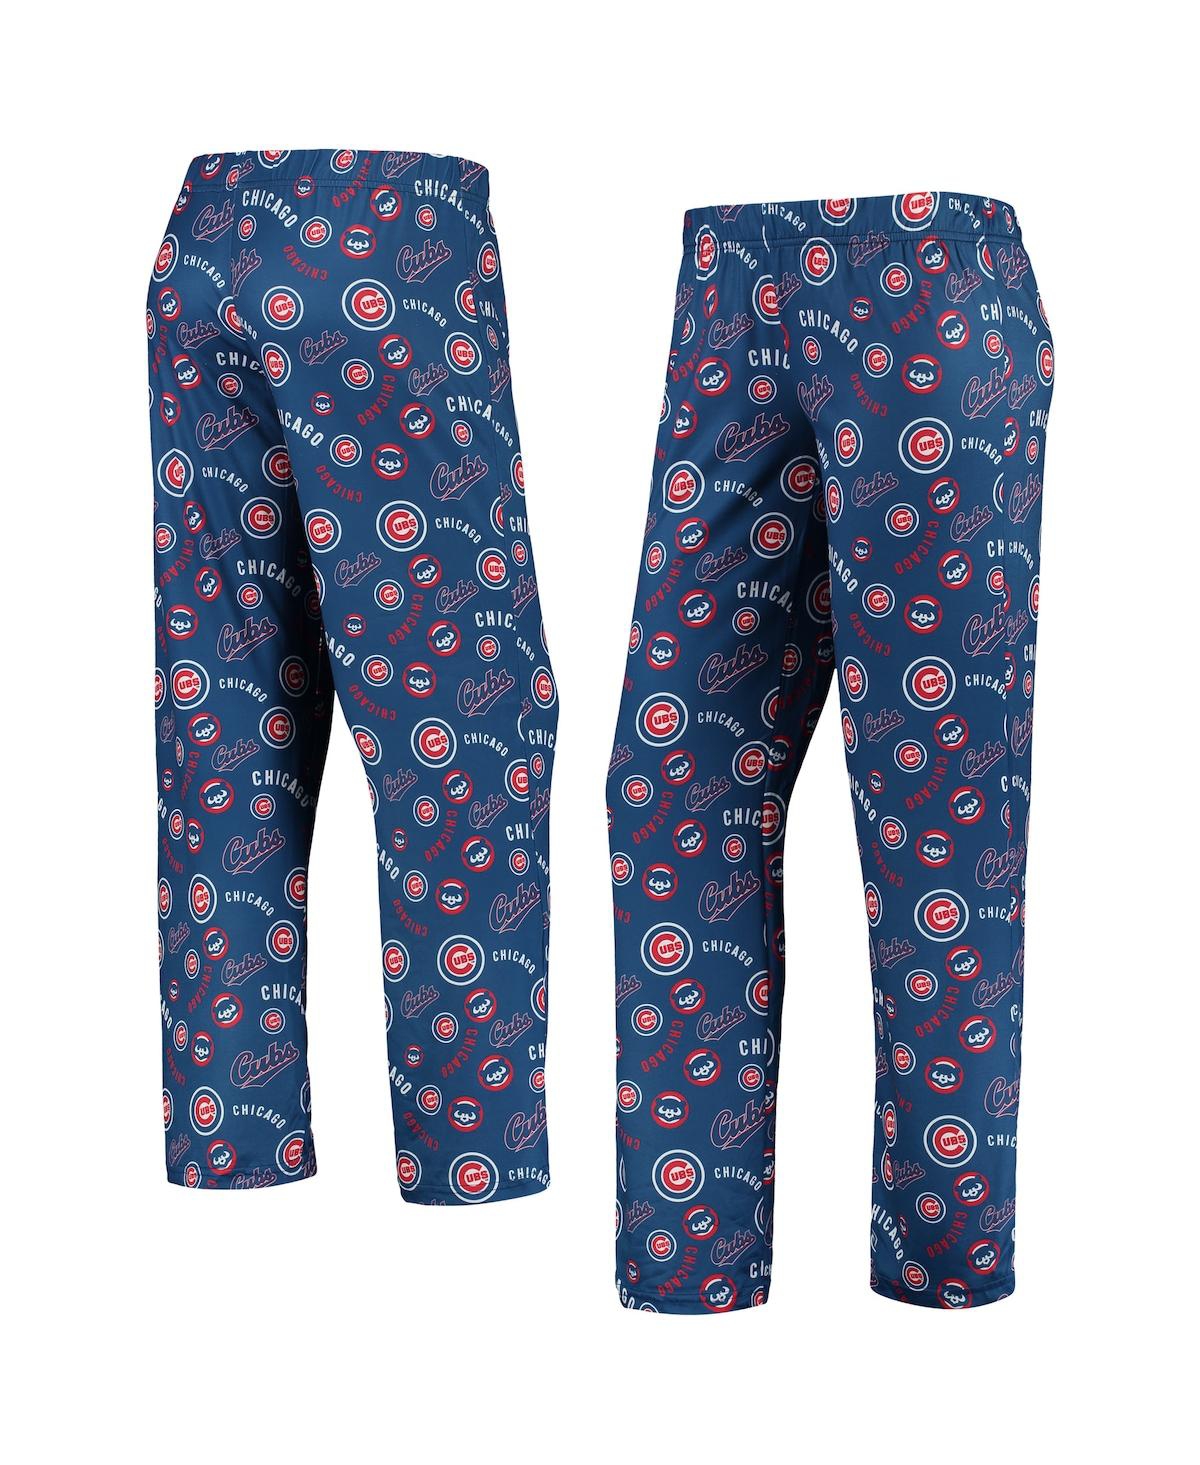 Women's Royal Chicago Cubs Retro Print Sleep Pants - Royal